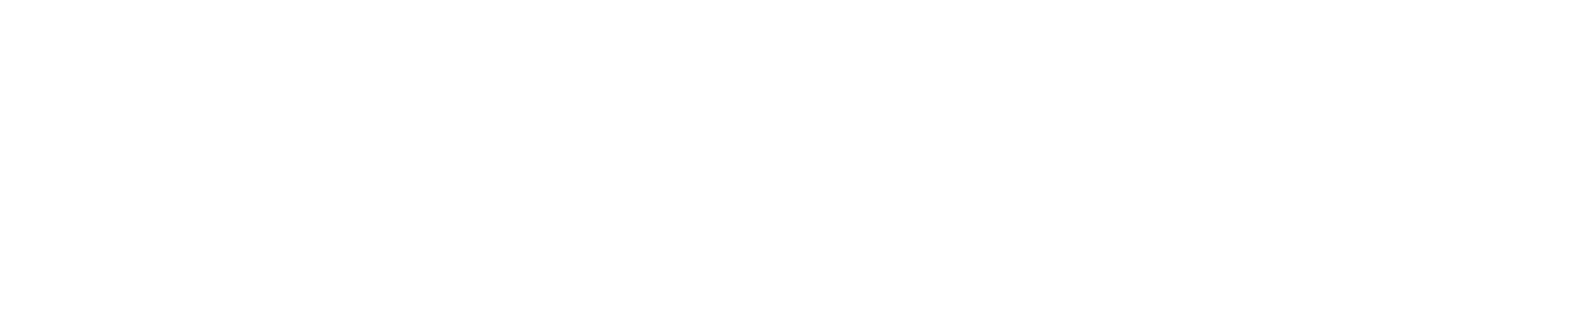 Progenity Logo groß für dunkle Hintergründe (transparentes PNG)